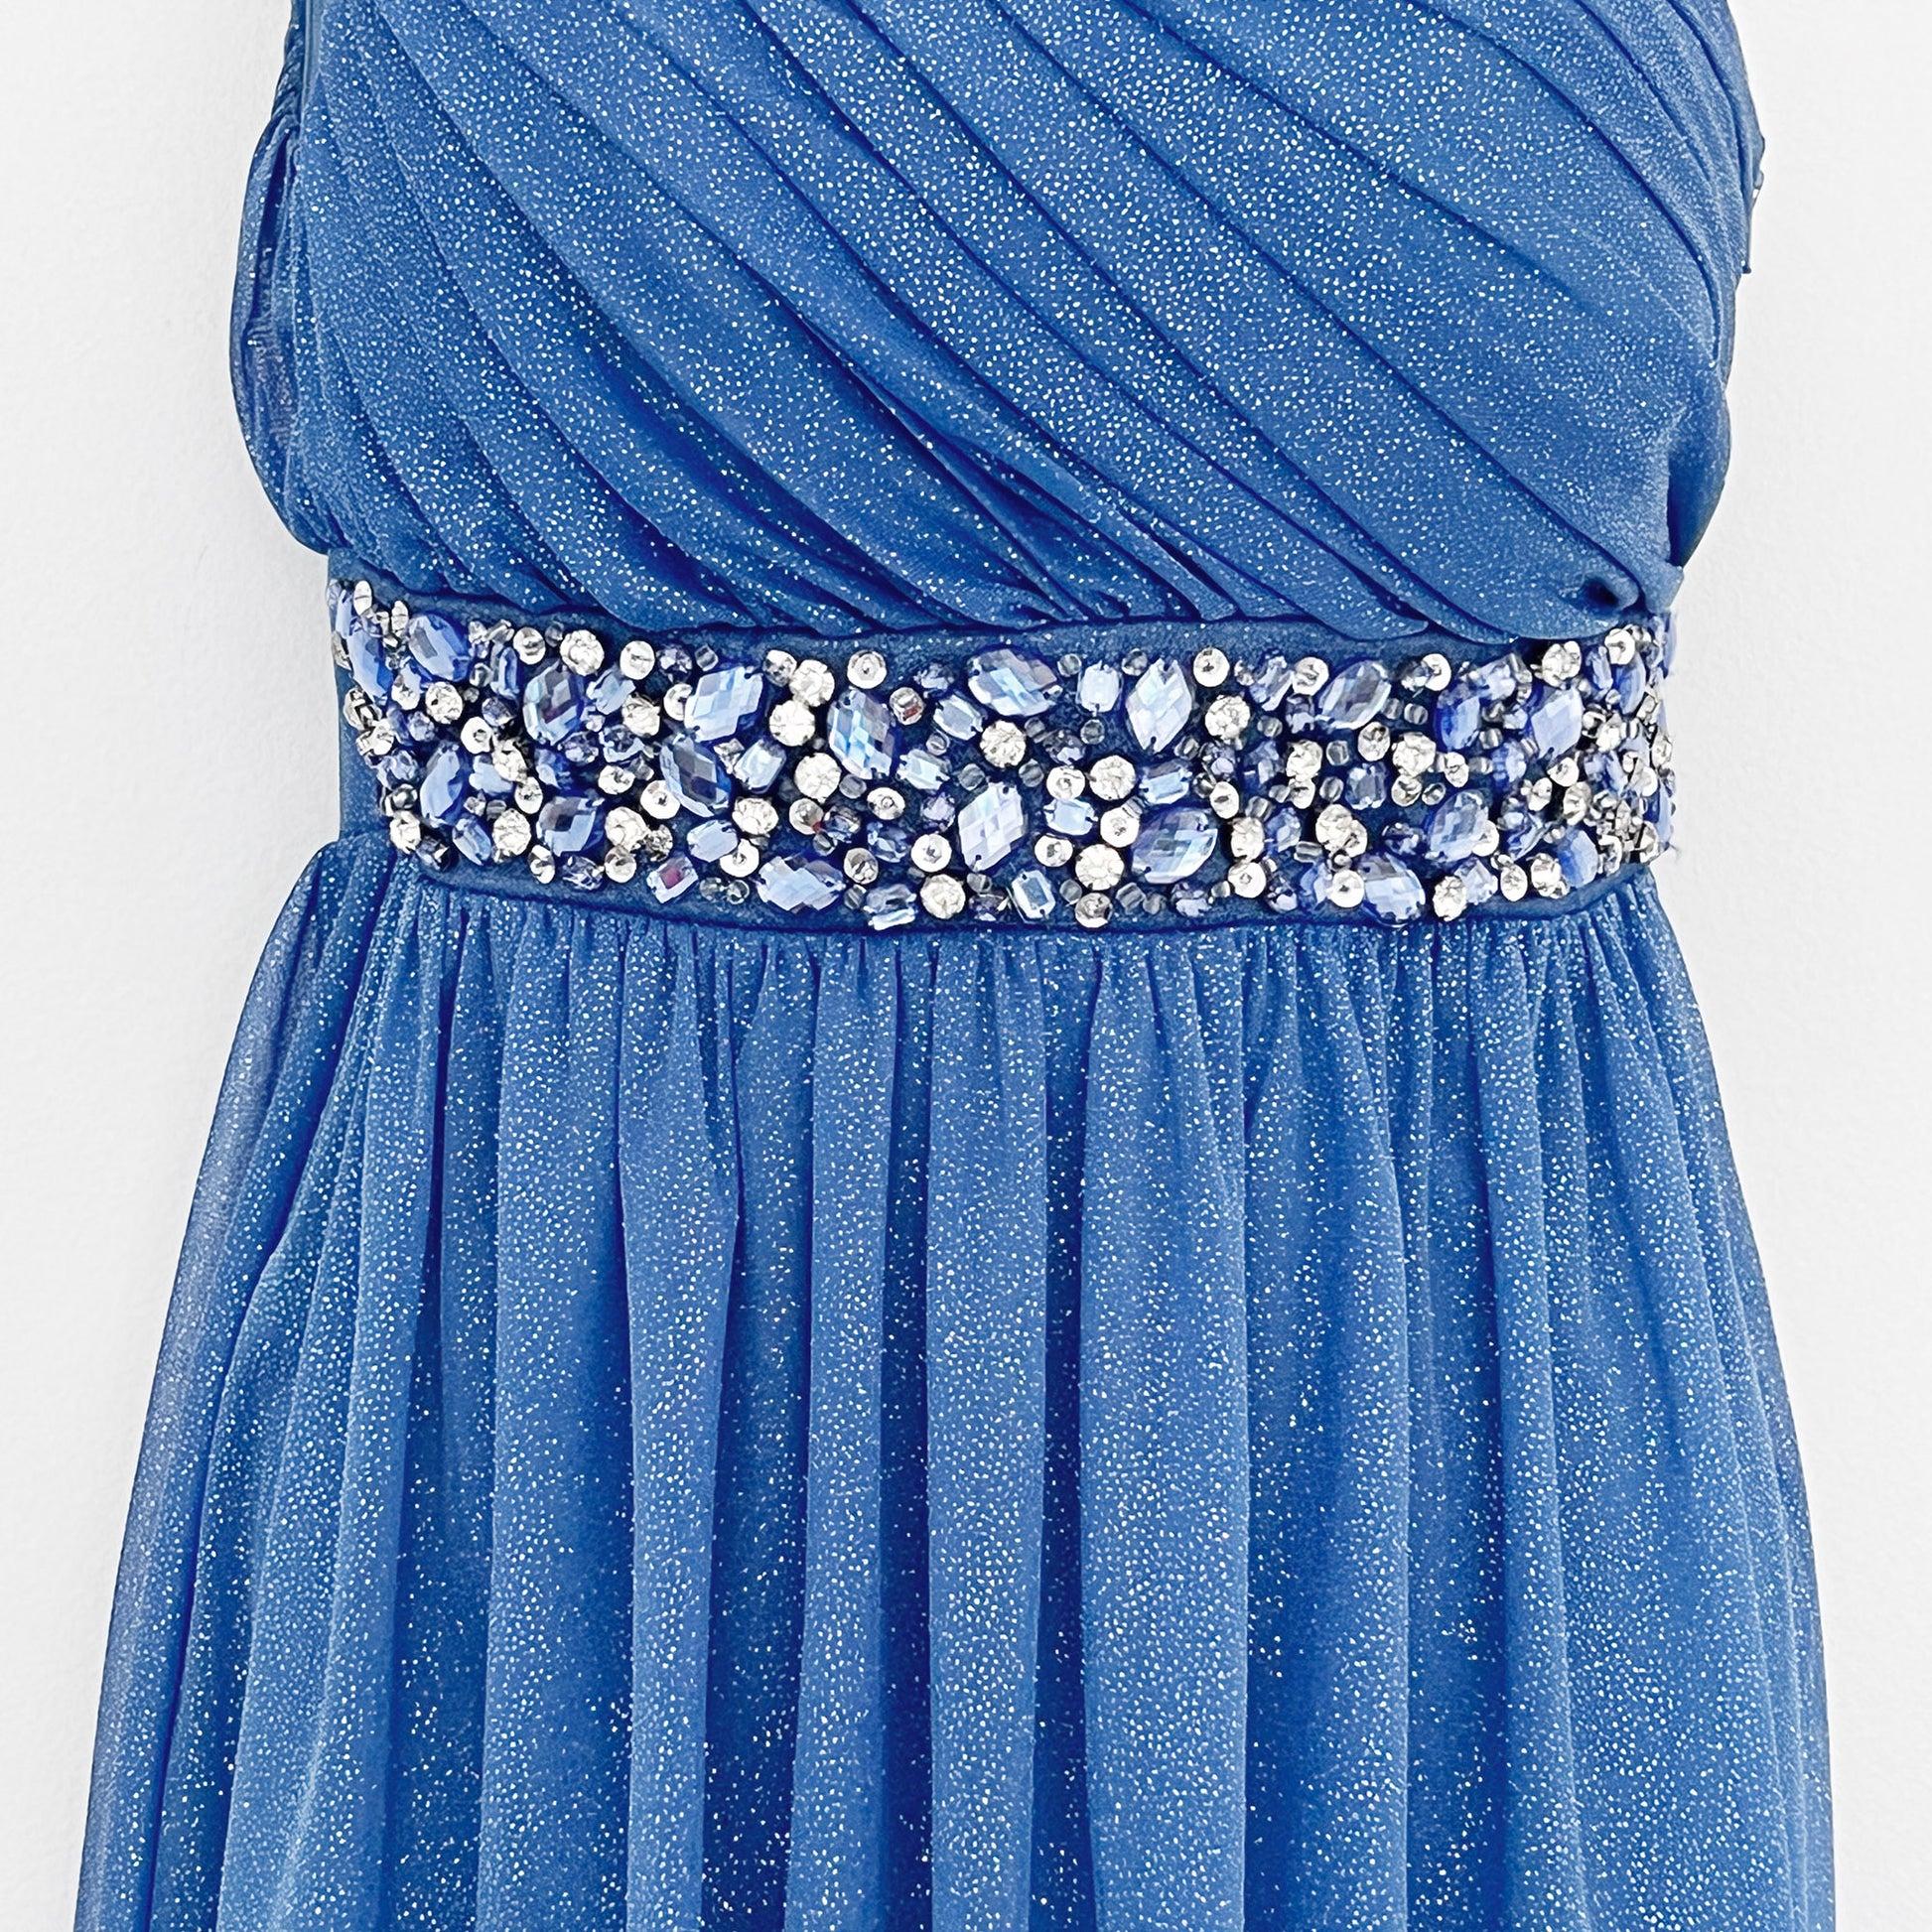 City-Studio-Rhinestone-Embellished-Blue-Mini-Dress_-close-up-view.-Shop-www.eBargainsAndDeals.com